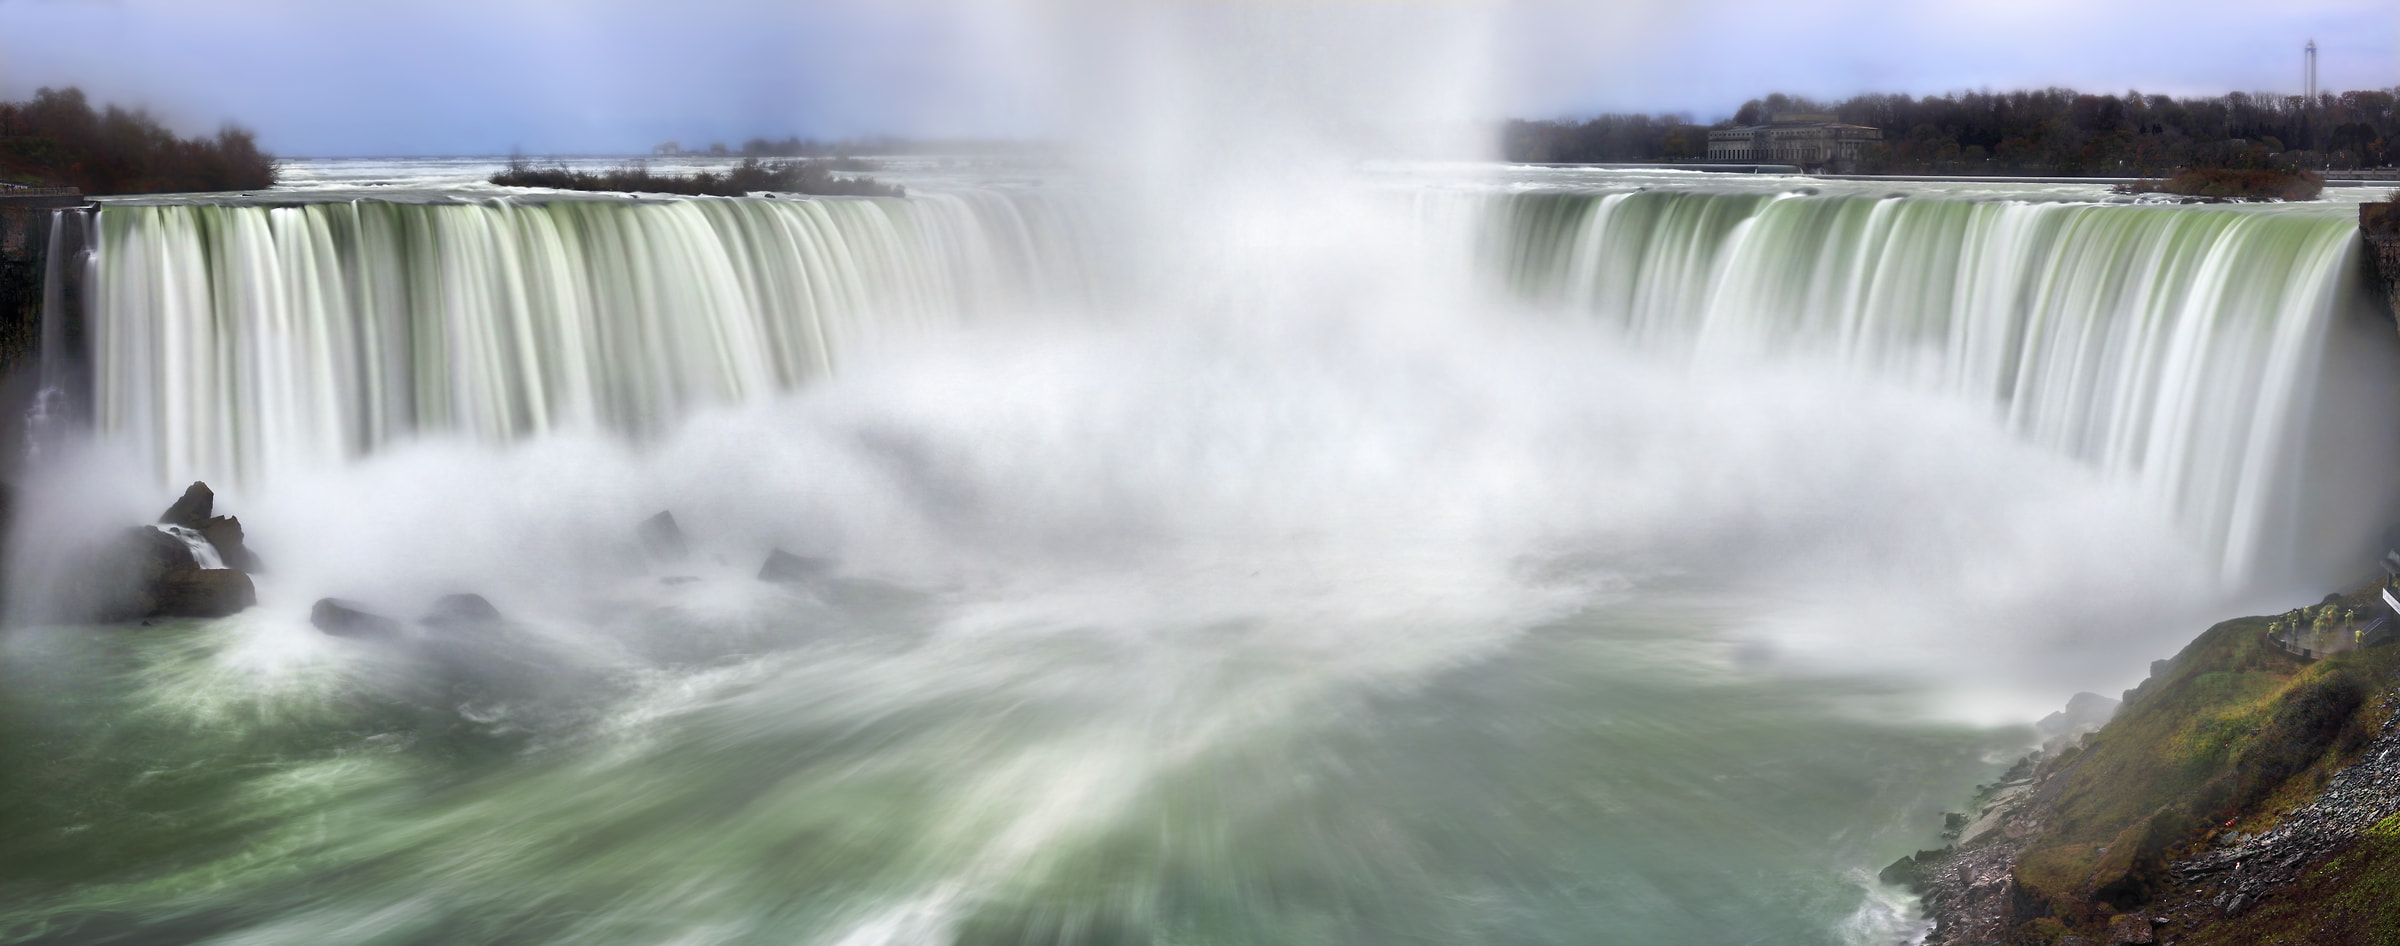 345 megapixels! A very high resolution, large-format VAST photo print of Niagara Falls; photograph created by Phil Crawshay in Niagara Falls, Ontario, Canada.